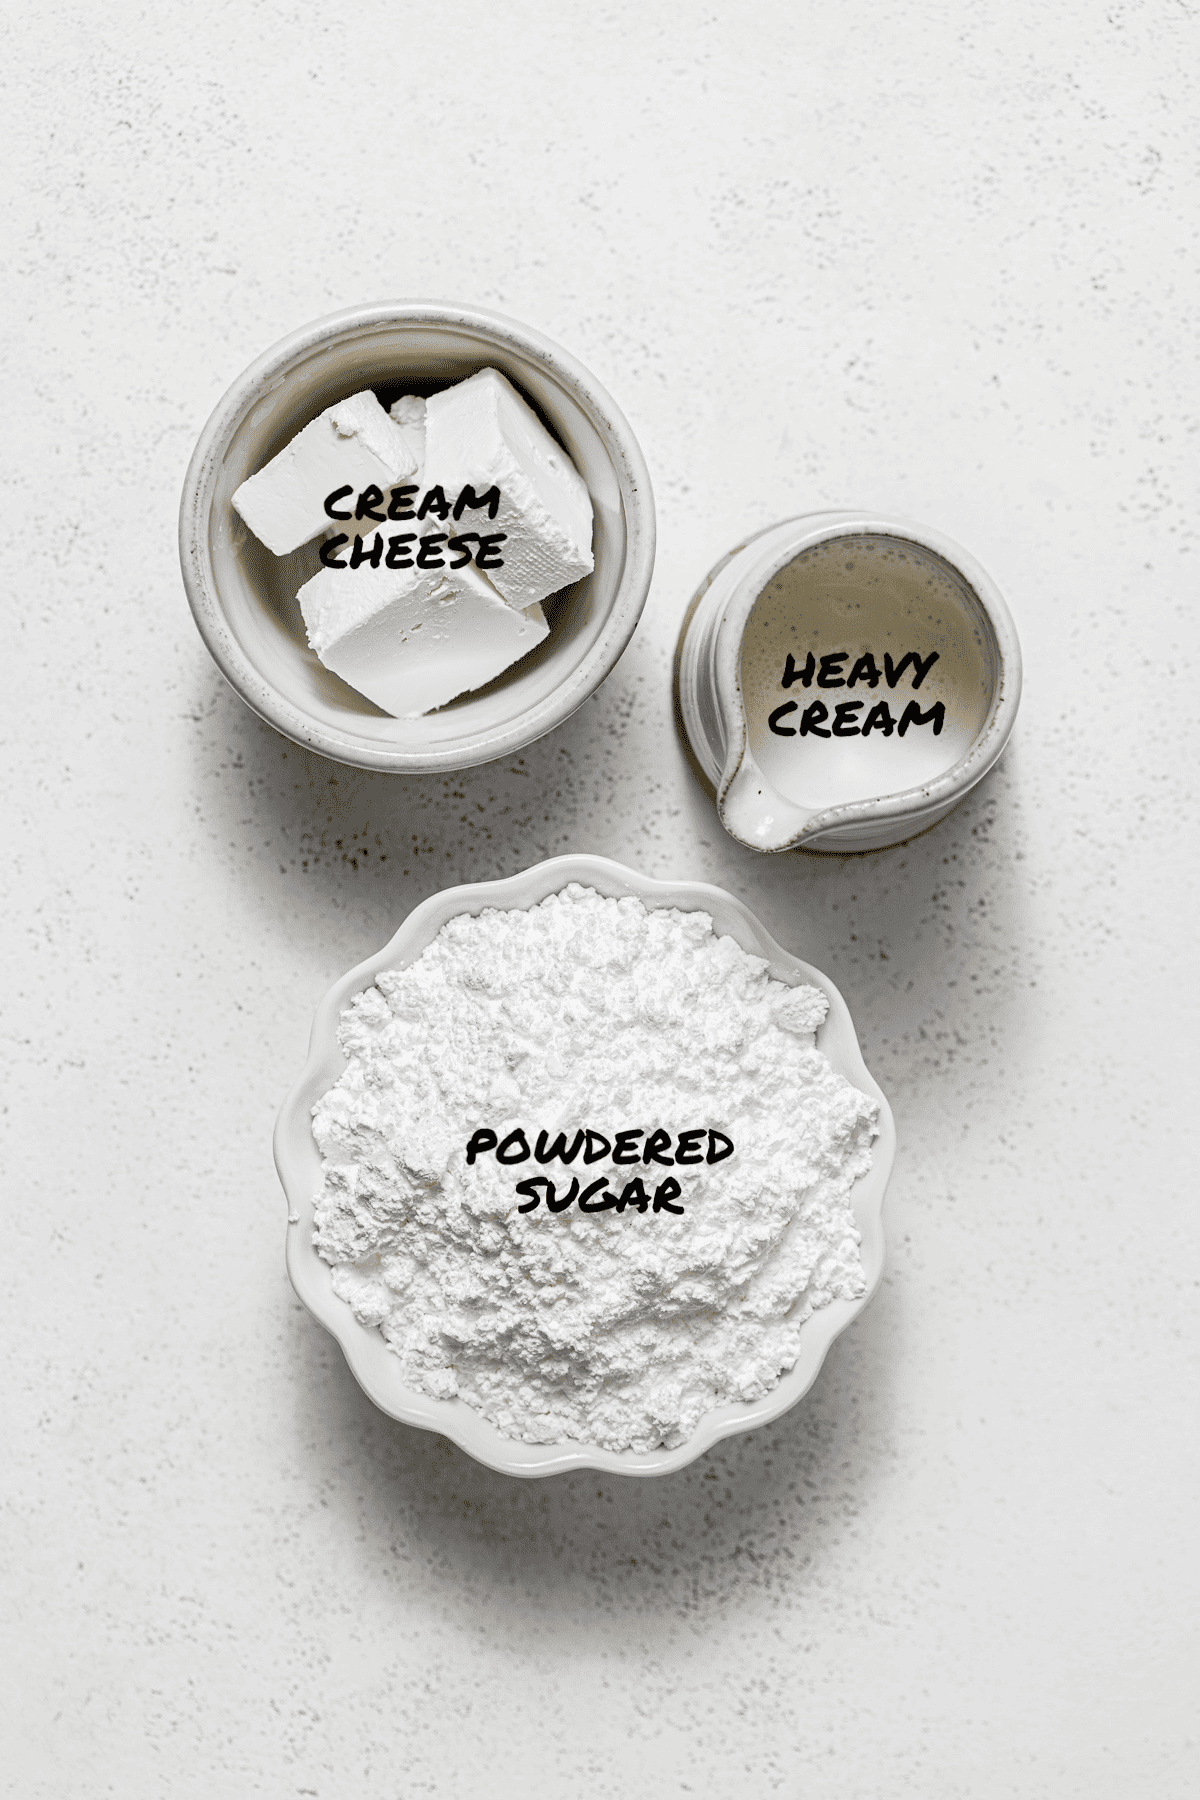 ingredients for cream cheese glaze.